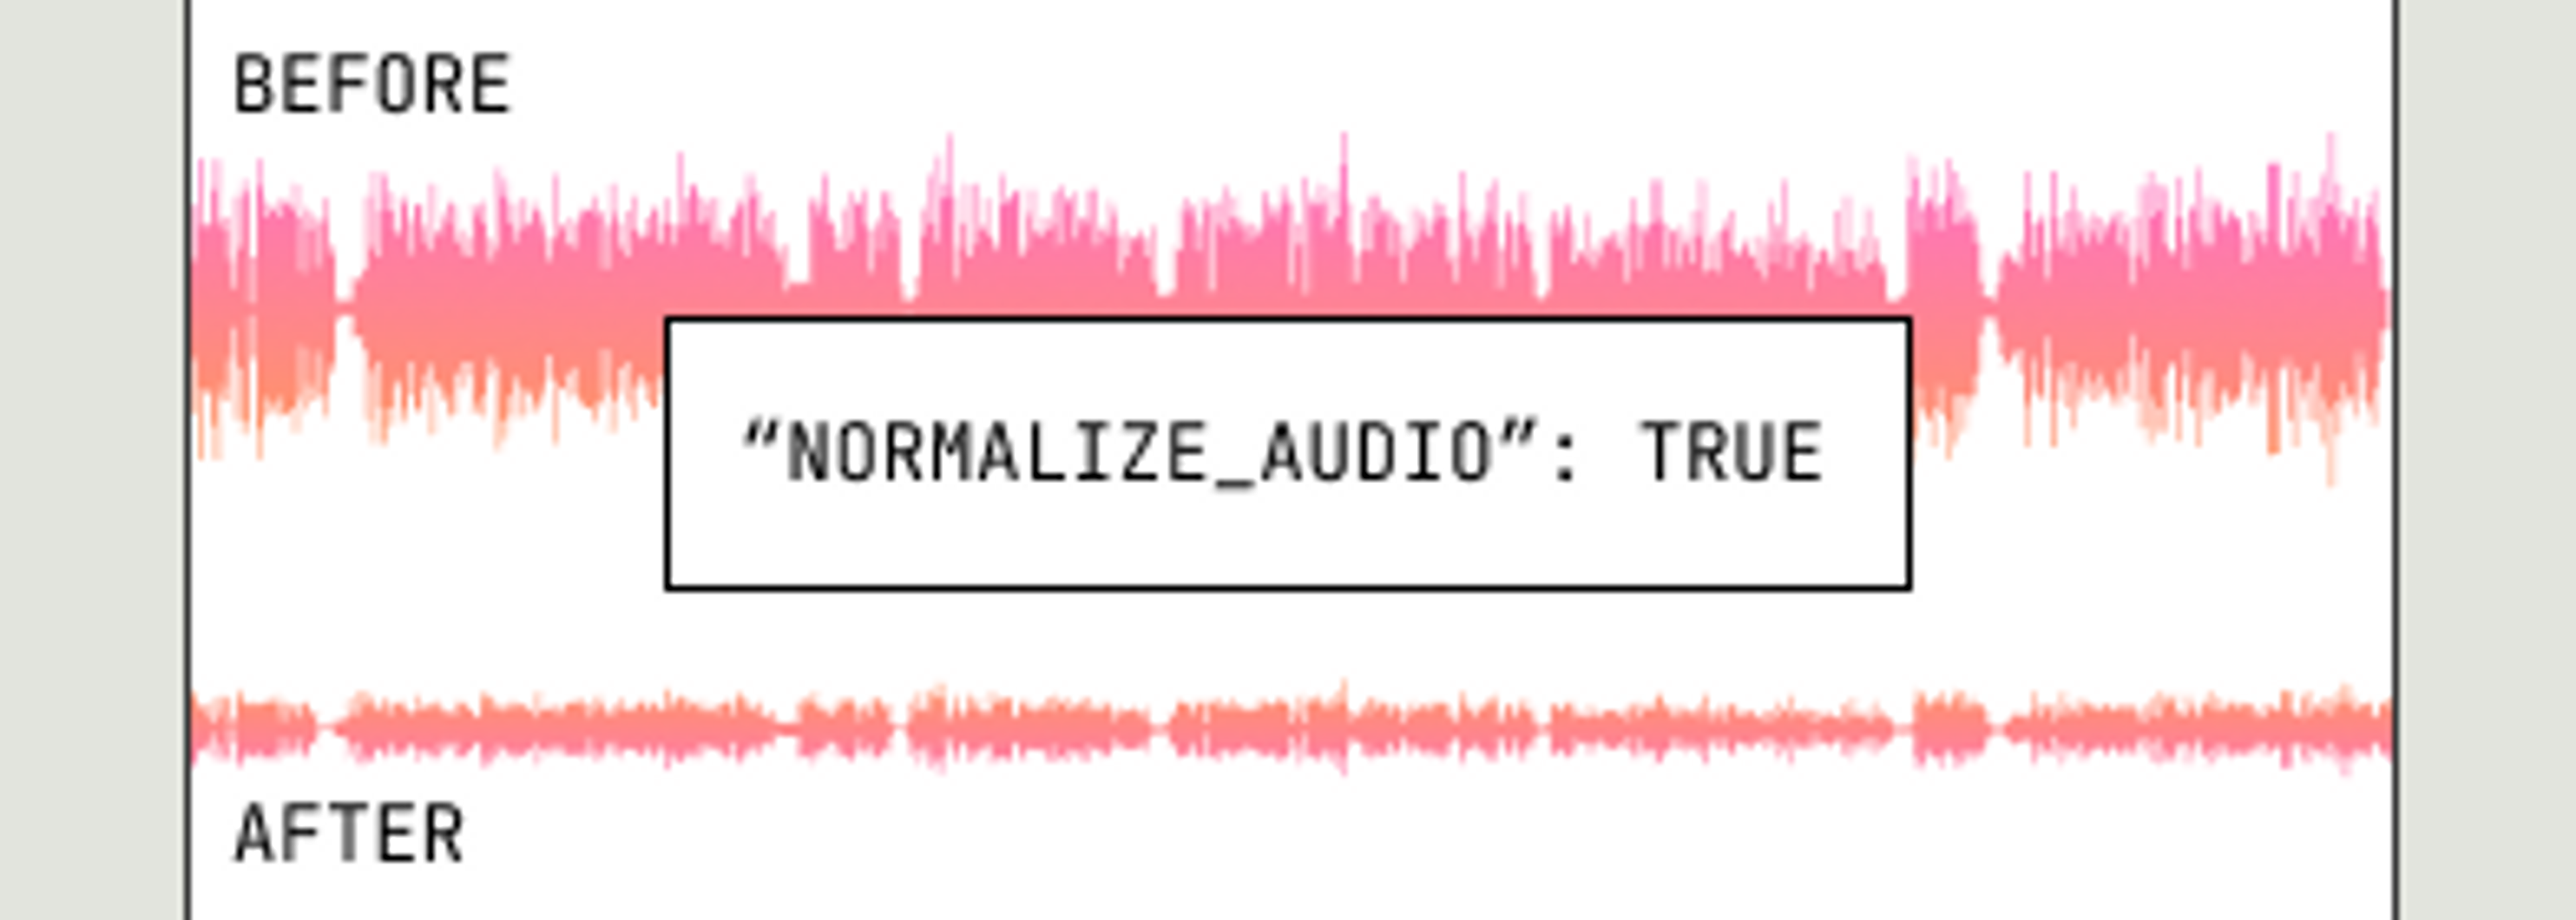 Audio normalization